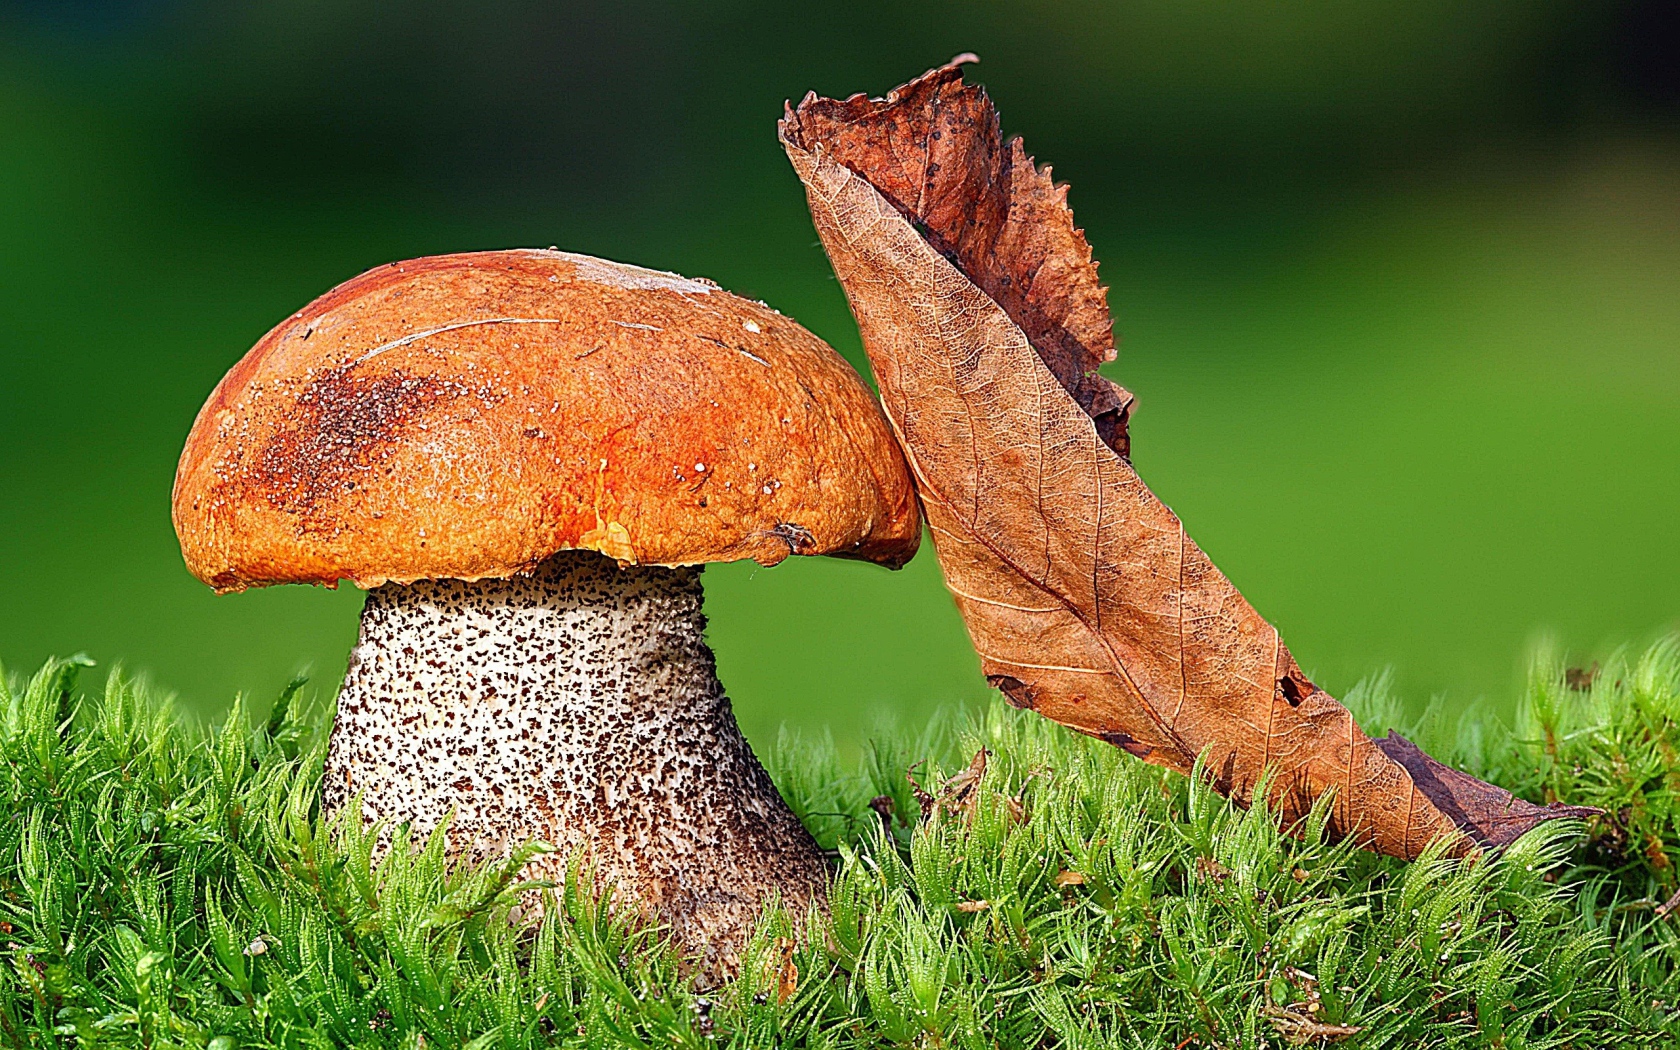 Orange-cap boletus mushroom sheet